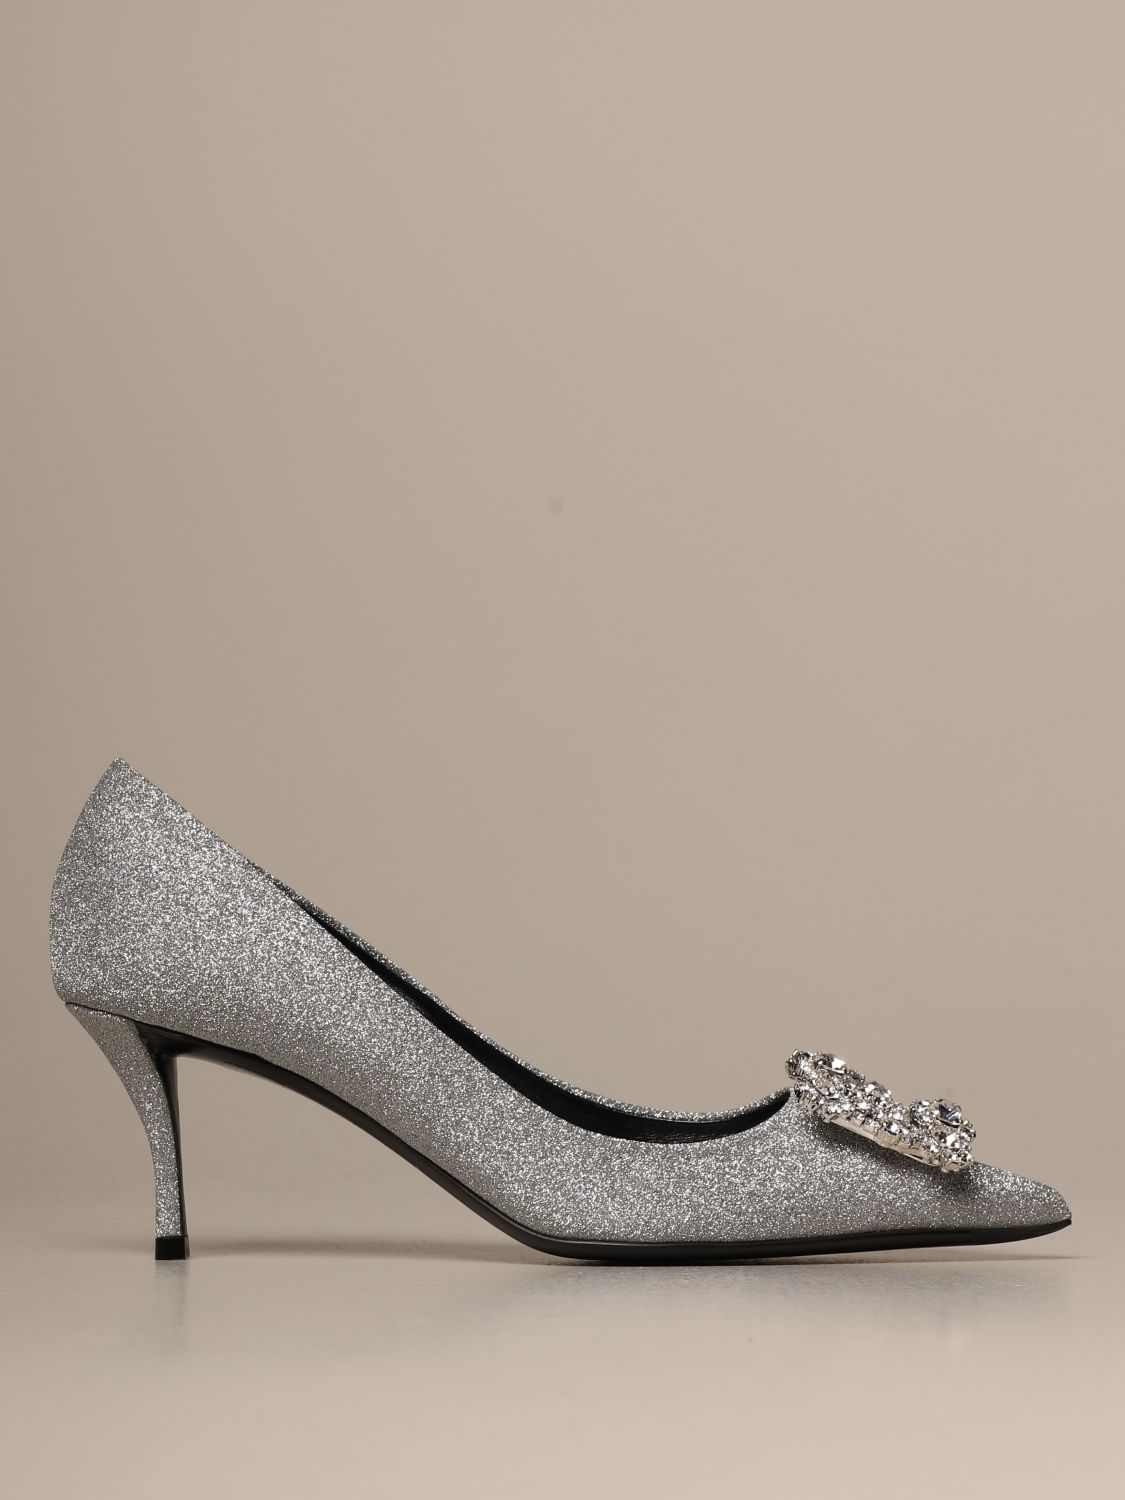 roger vivier silver heels